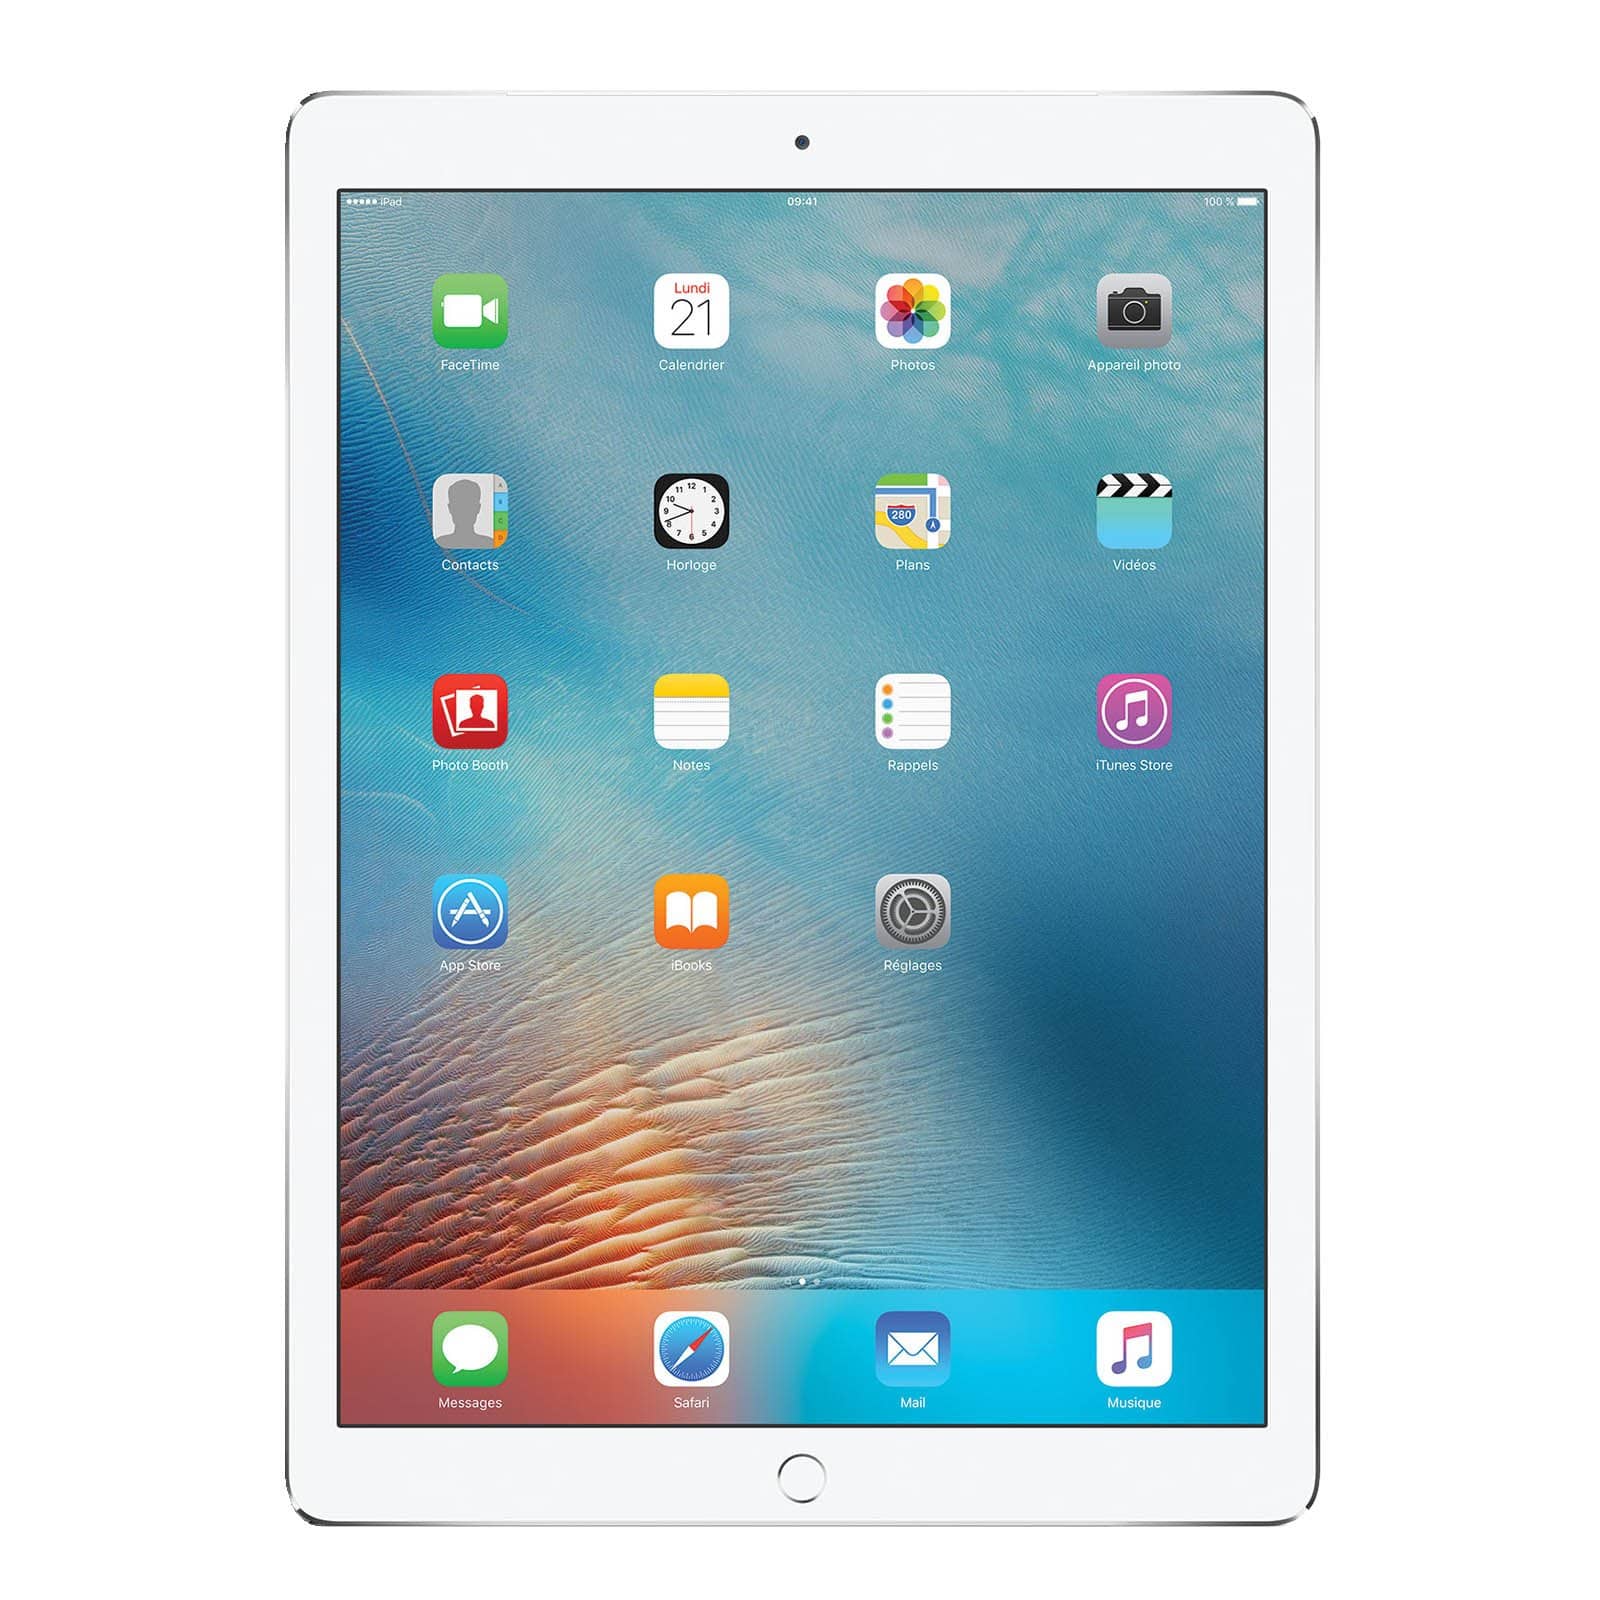 iPad Pro 12.9 Inch 2nd Gen 512GB Silver Very Good - Unlocked